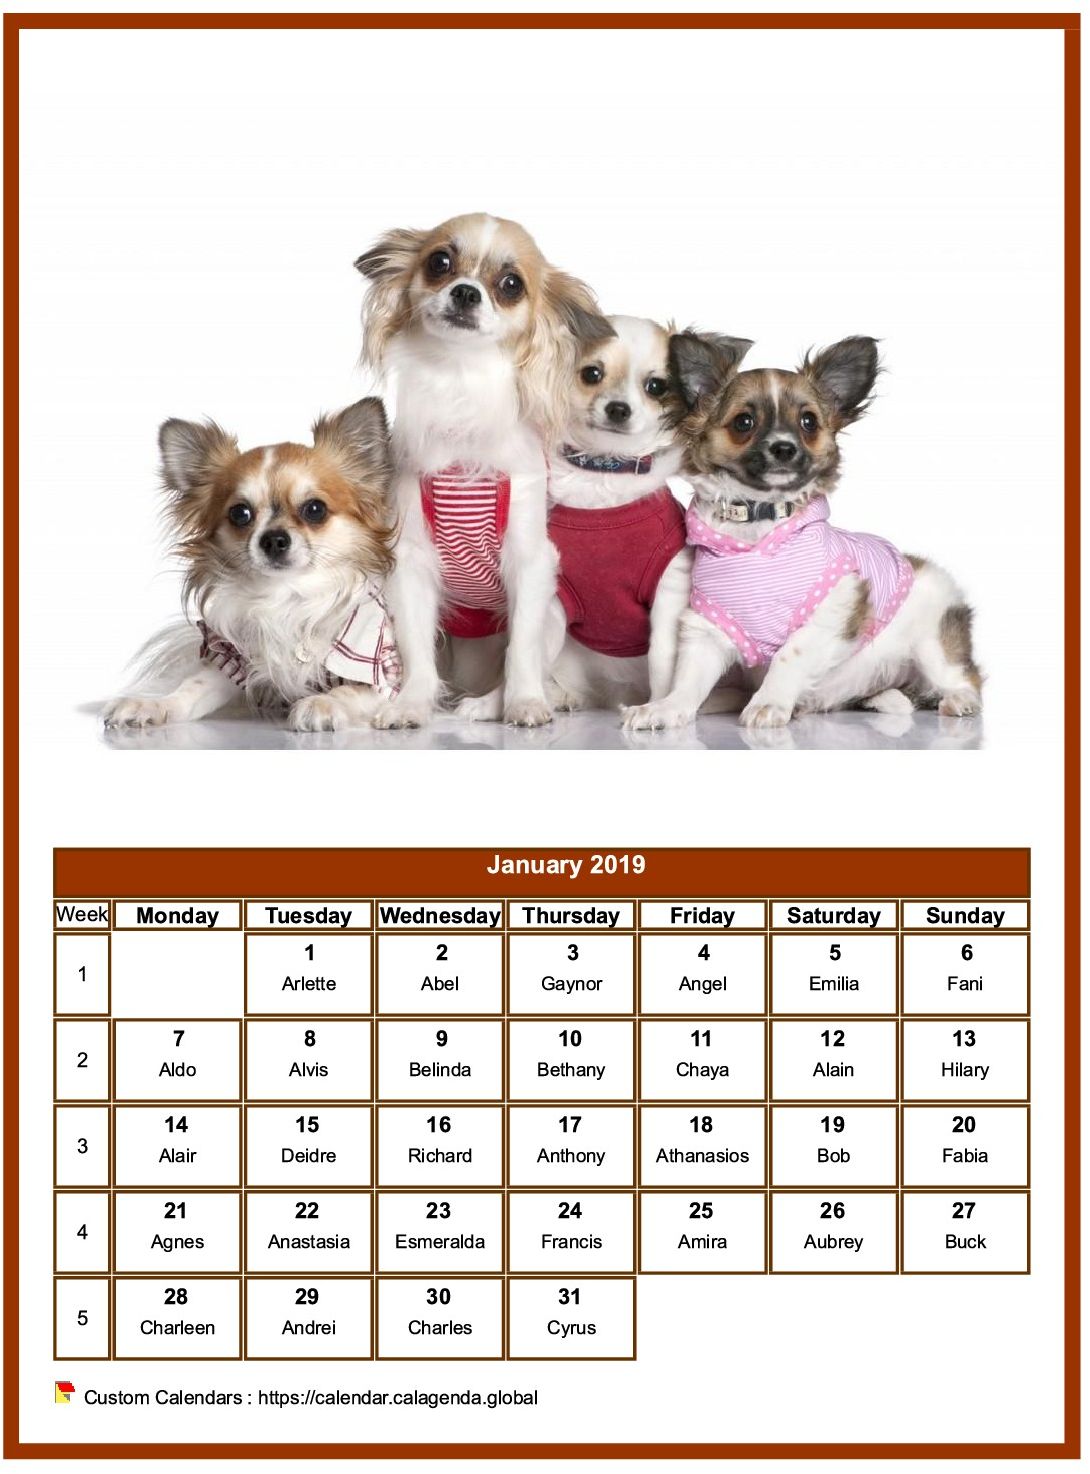 Calendar january 2019 dogs